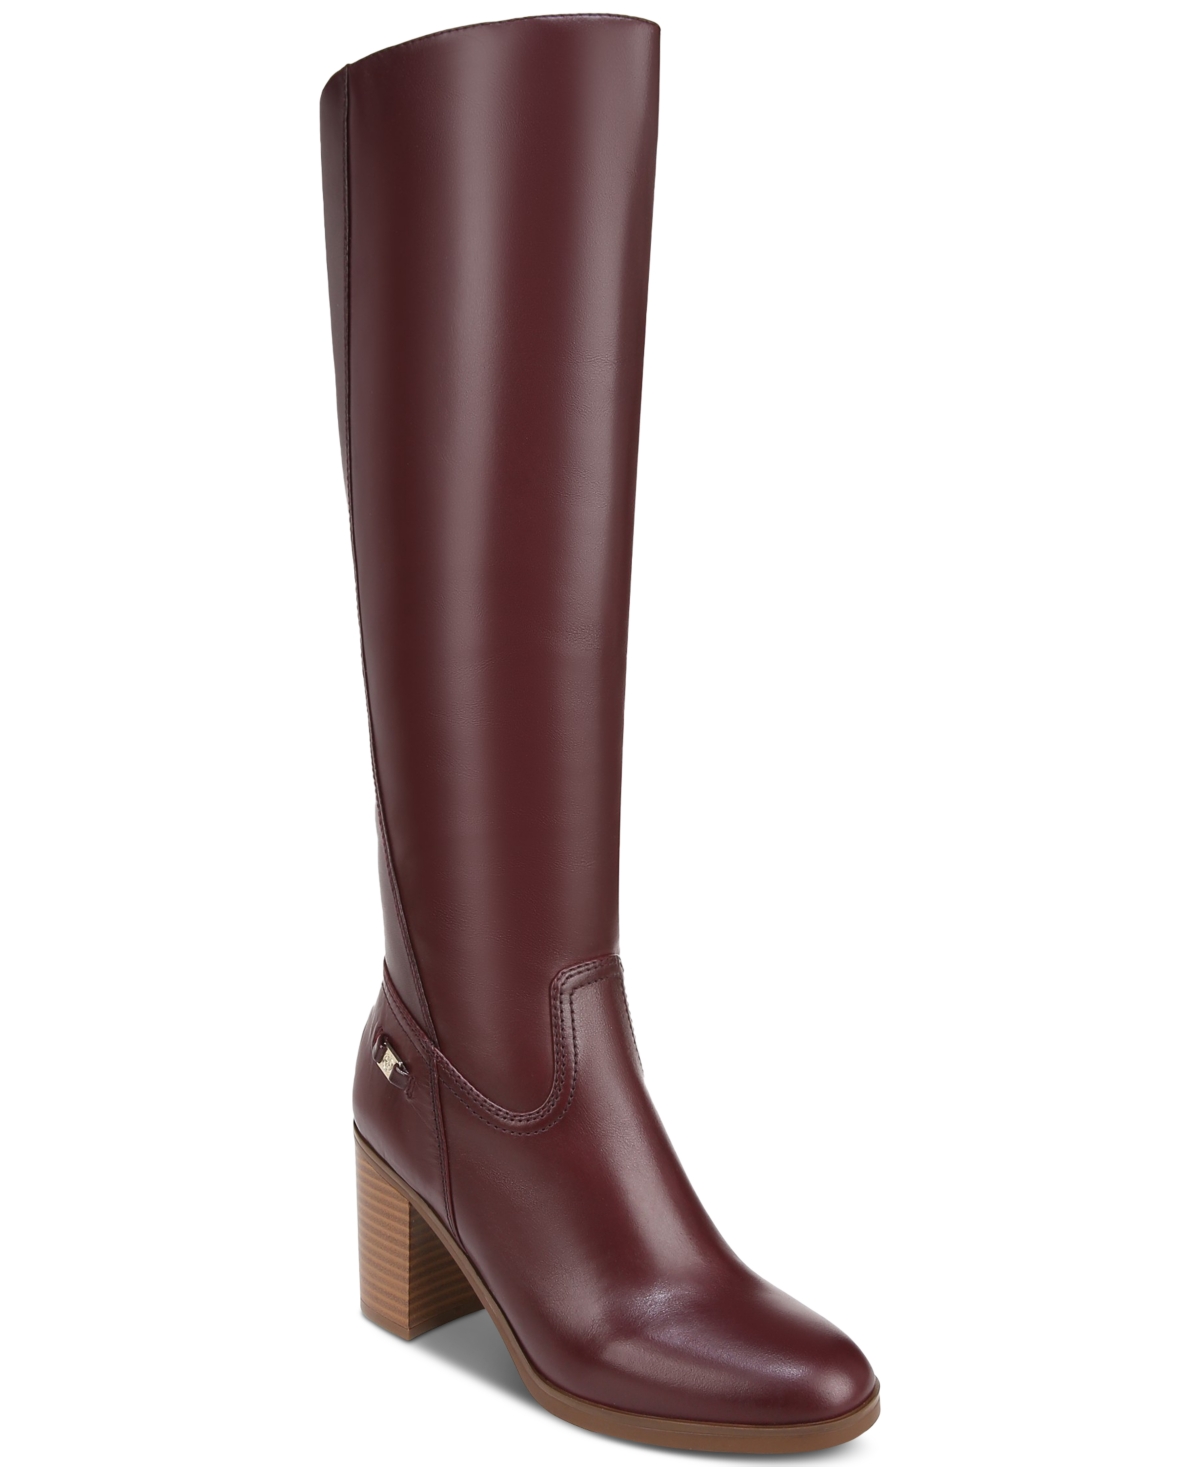 Women's Odettee Memory Foam Block Heel Knee High Riding Boots, Created for Macy's - Wine Leather